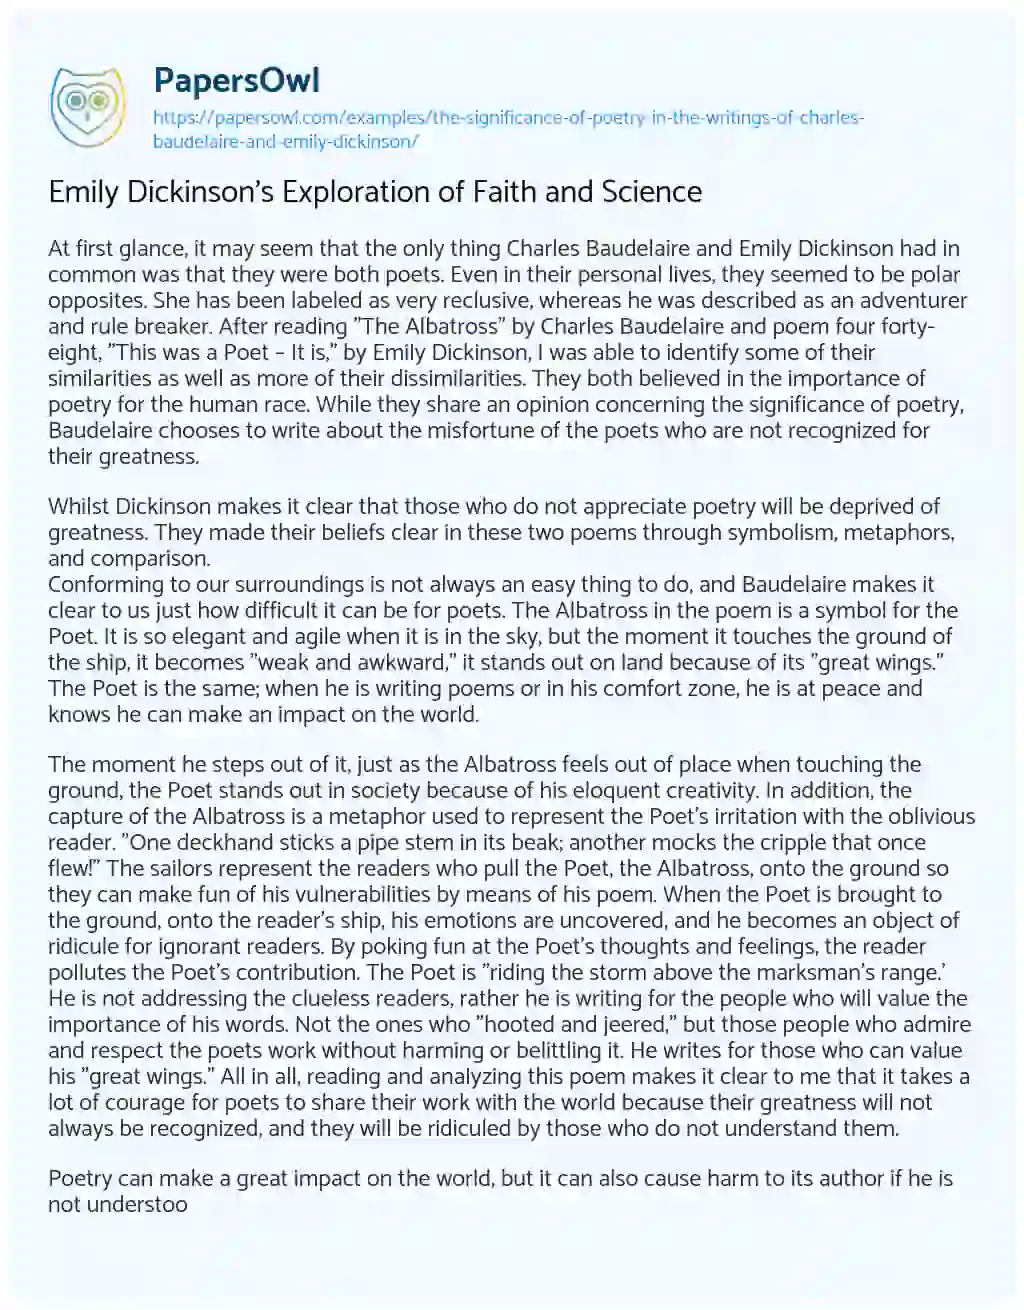 Essay on Emily Dickinson’s Exploration of Faith and Science